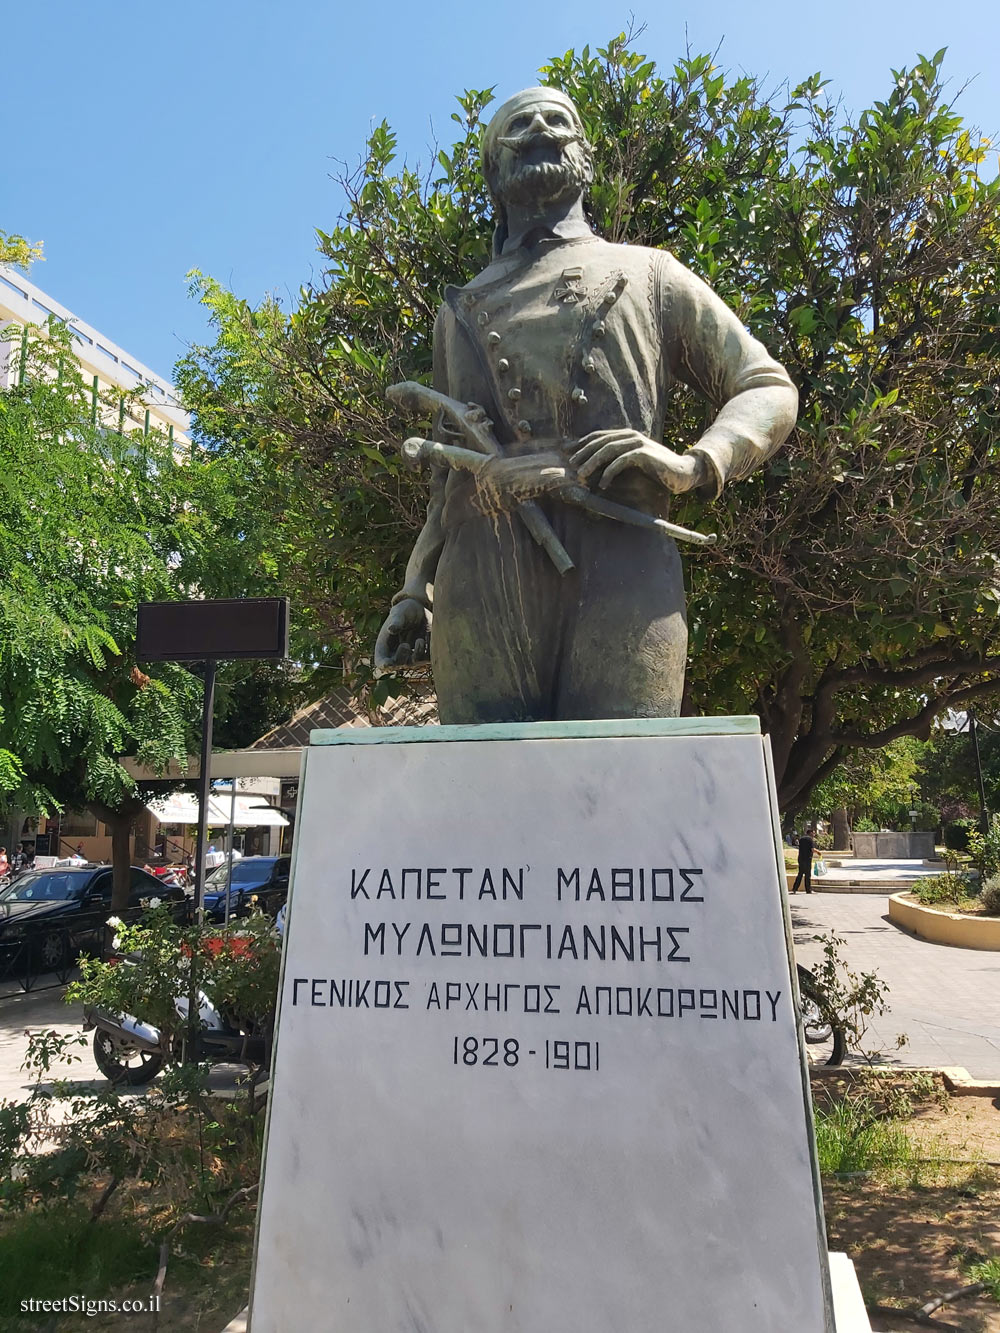 Chania - A monument to Matthew Mylonogiannis - 73131, Chalidon 9, Chania 731 31, Greece